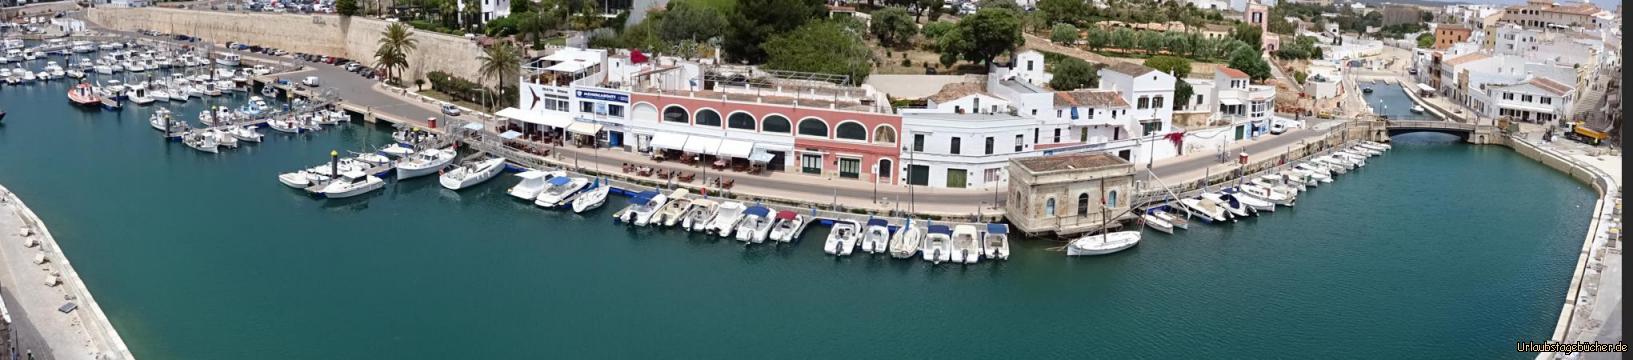 Aussicht vom Mirador des Ports de Ciutadella: Aussicht vom Mirador des Ports de Ciutadella